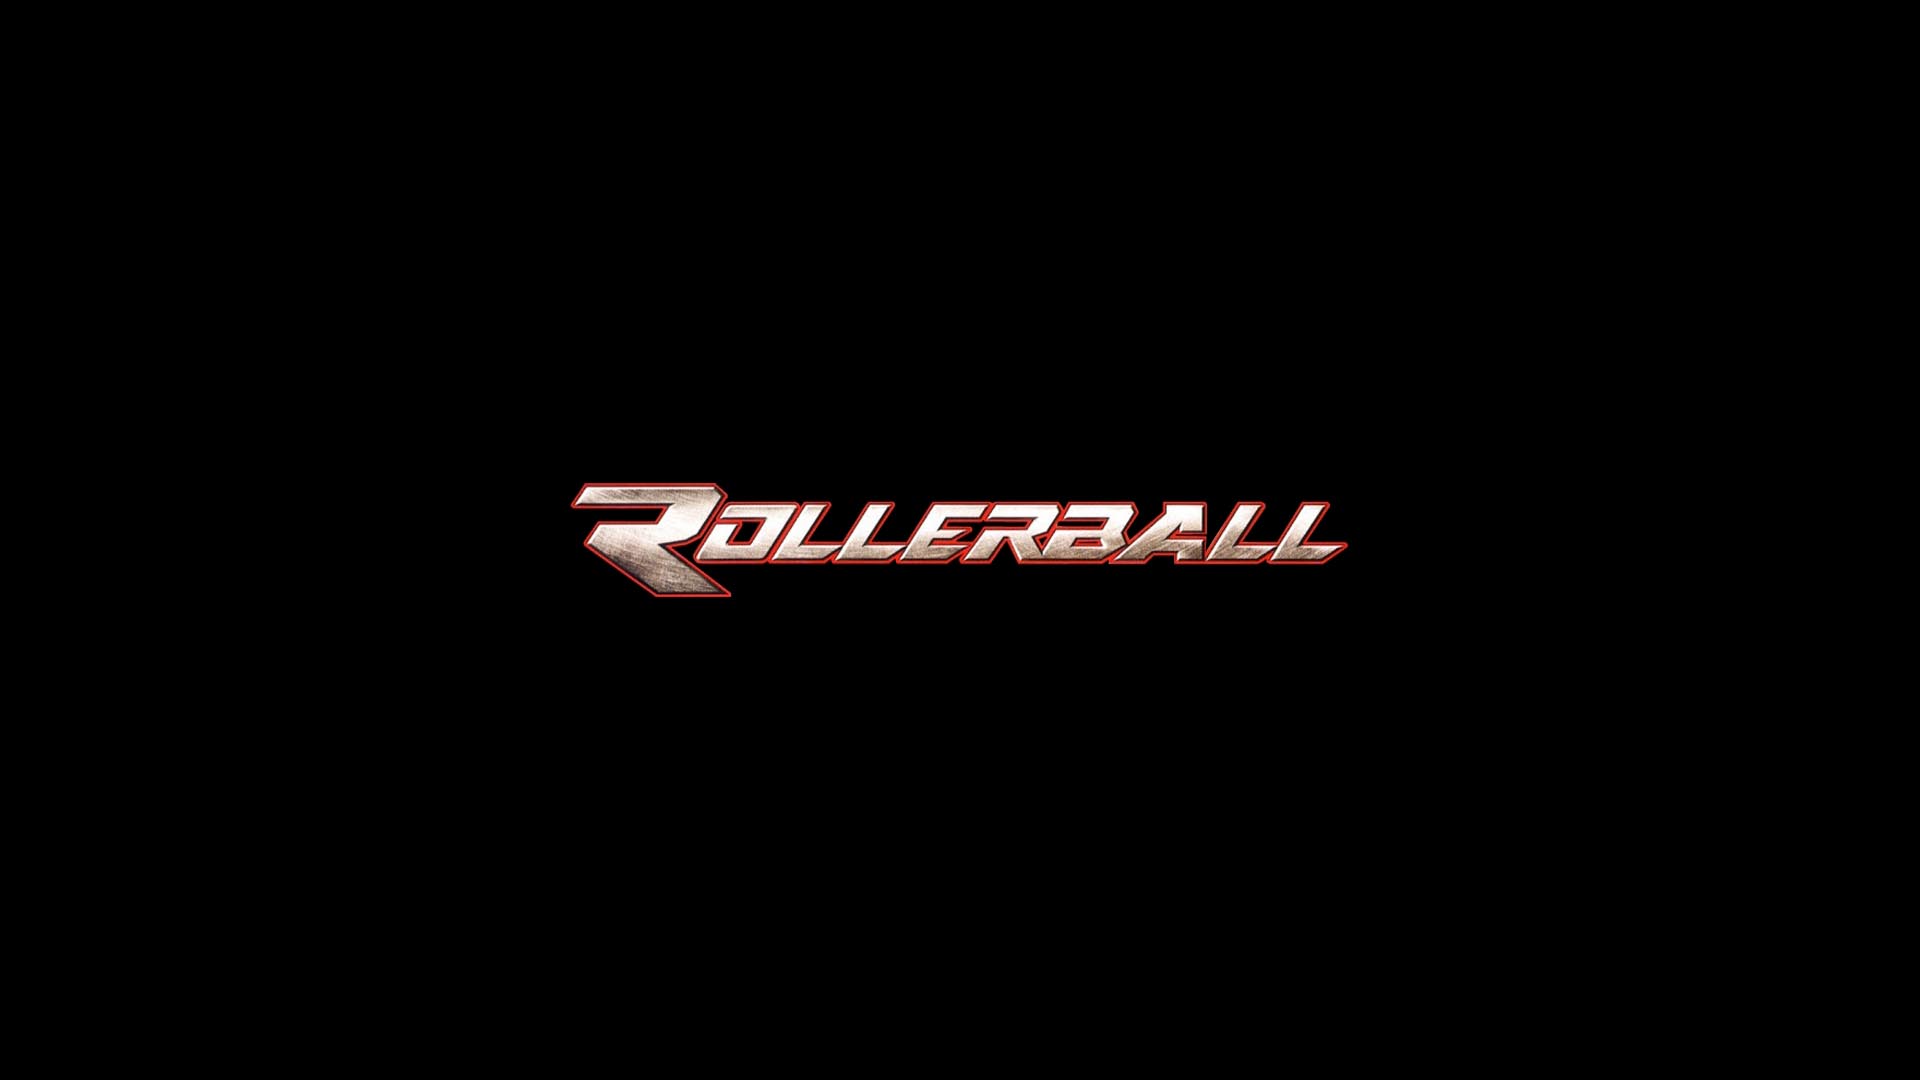 Rollerball HD Wallpaper